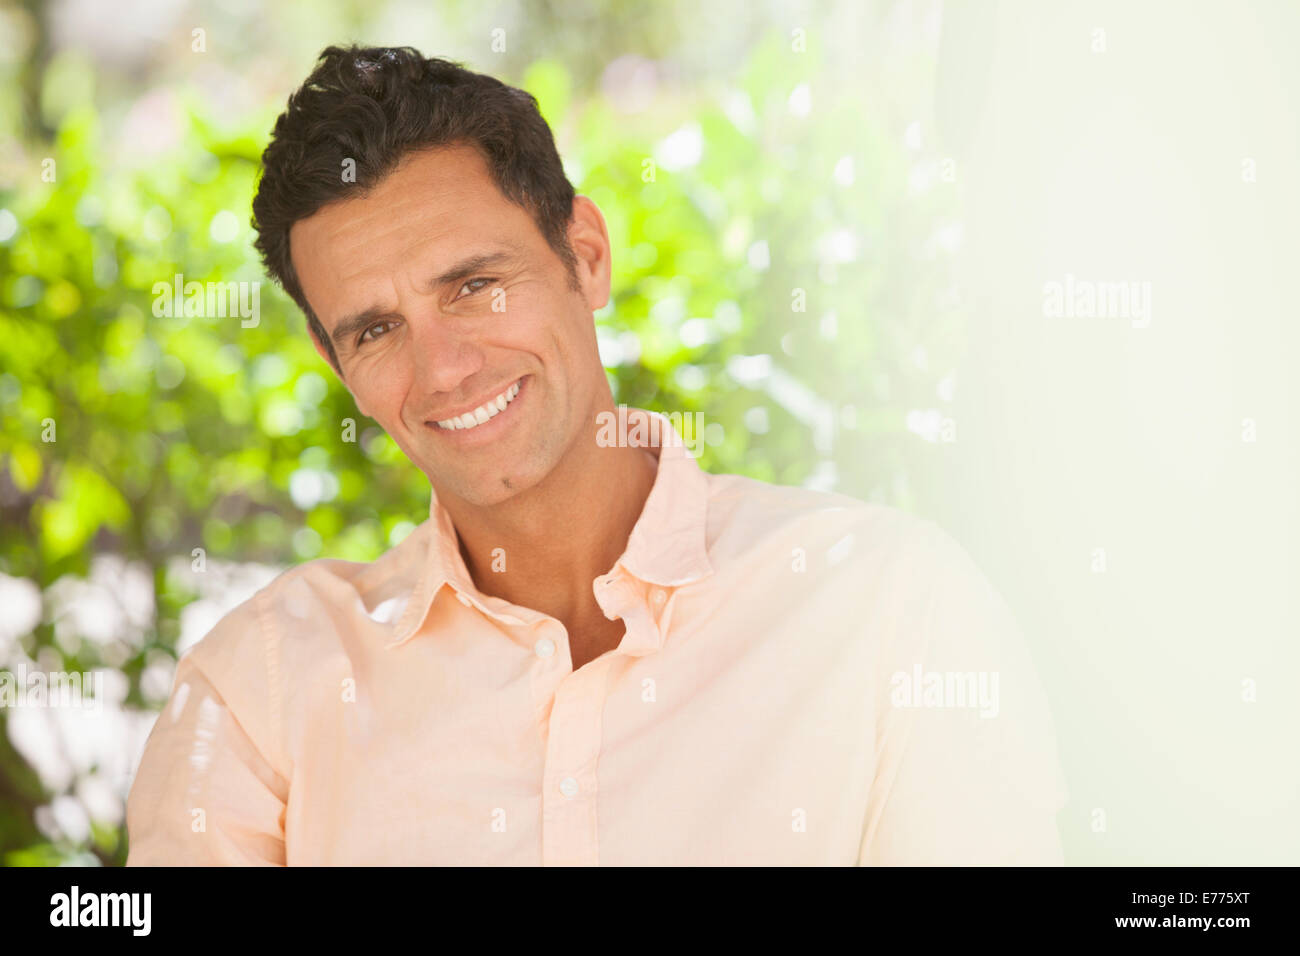 Man smiling outdoors Stock Photo